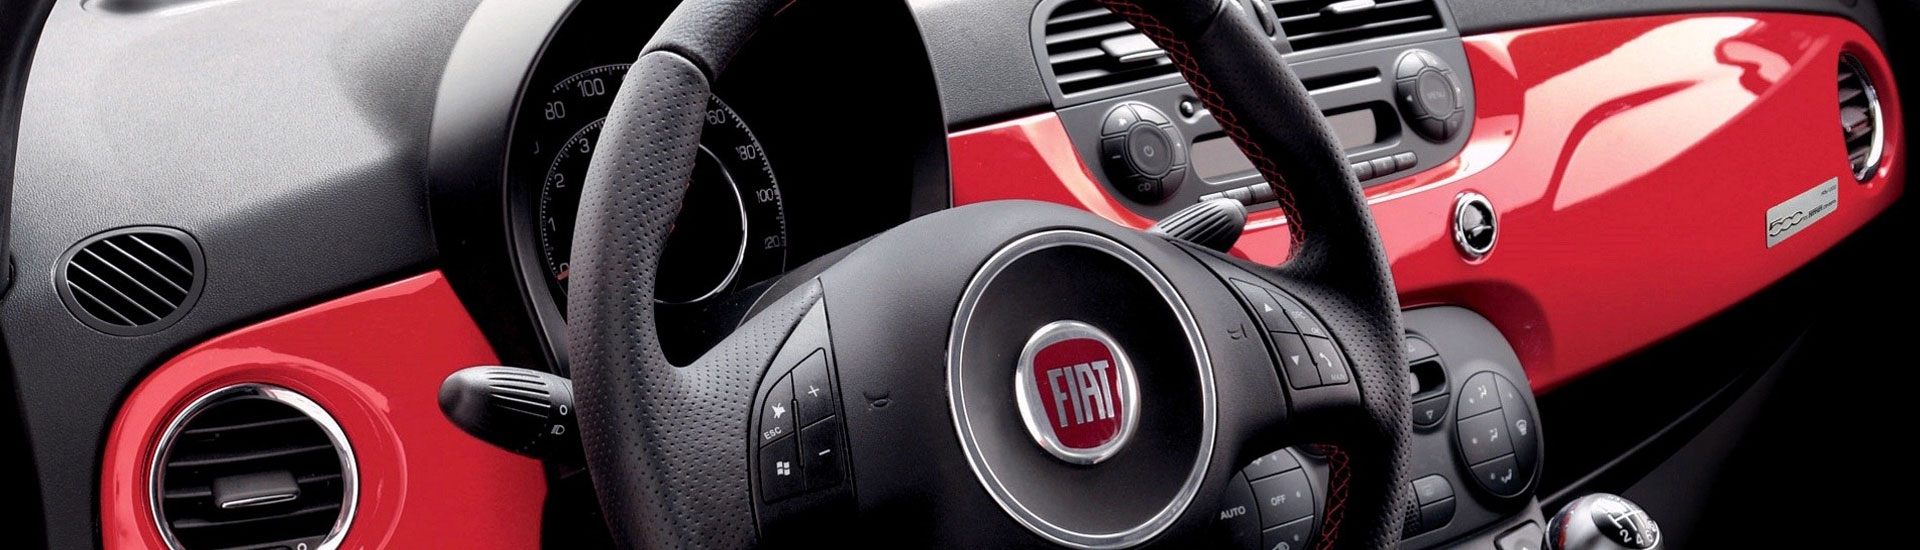 2015 Fiat 500 Abarth Custom Dash Kits